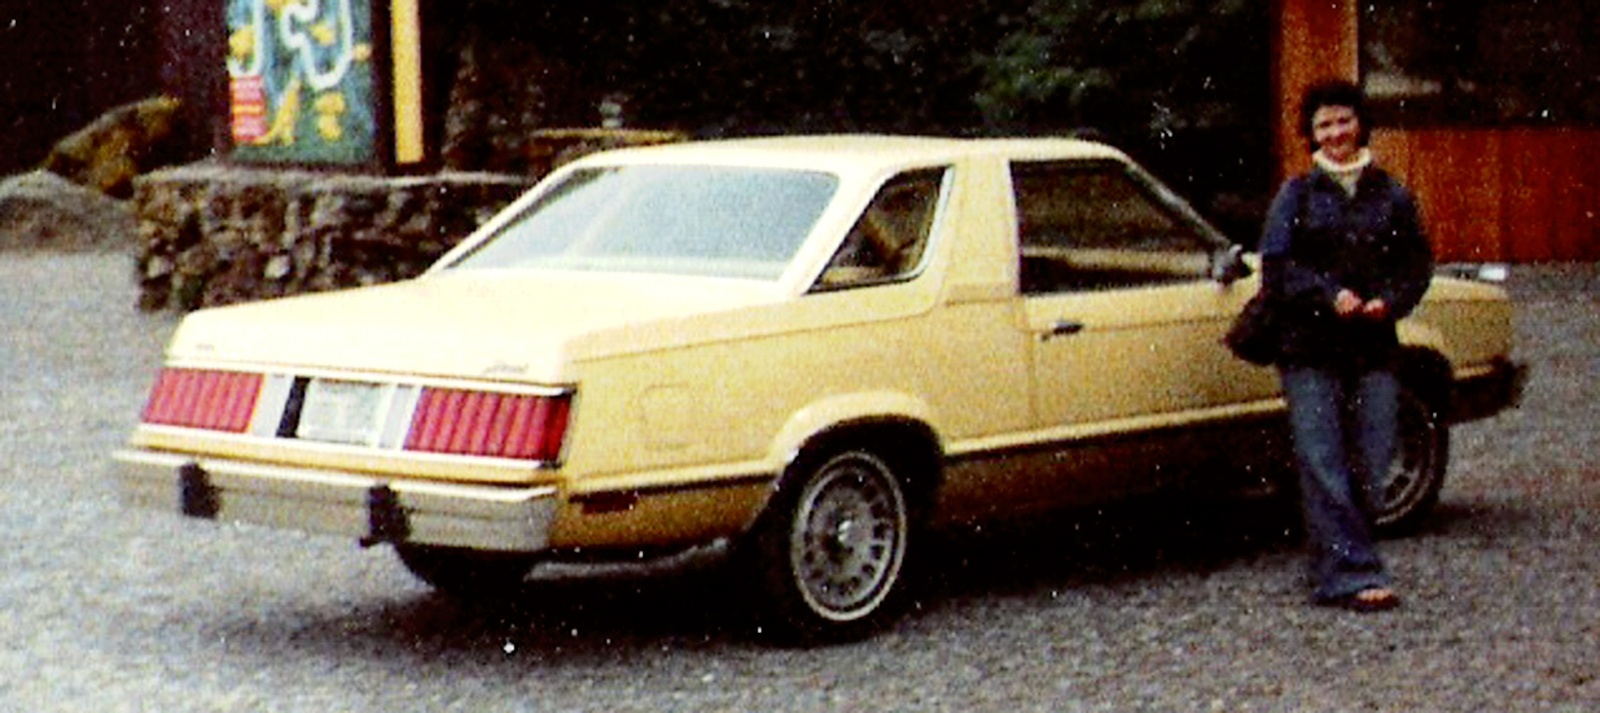 1977 Ford fairmount #6